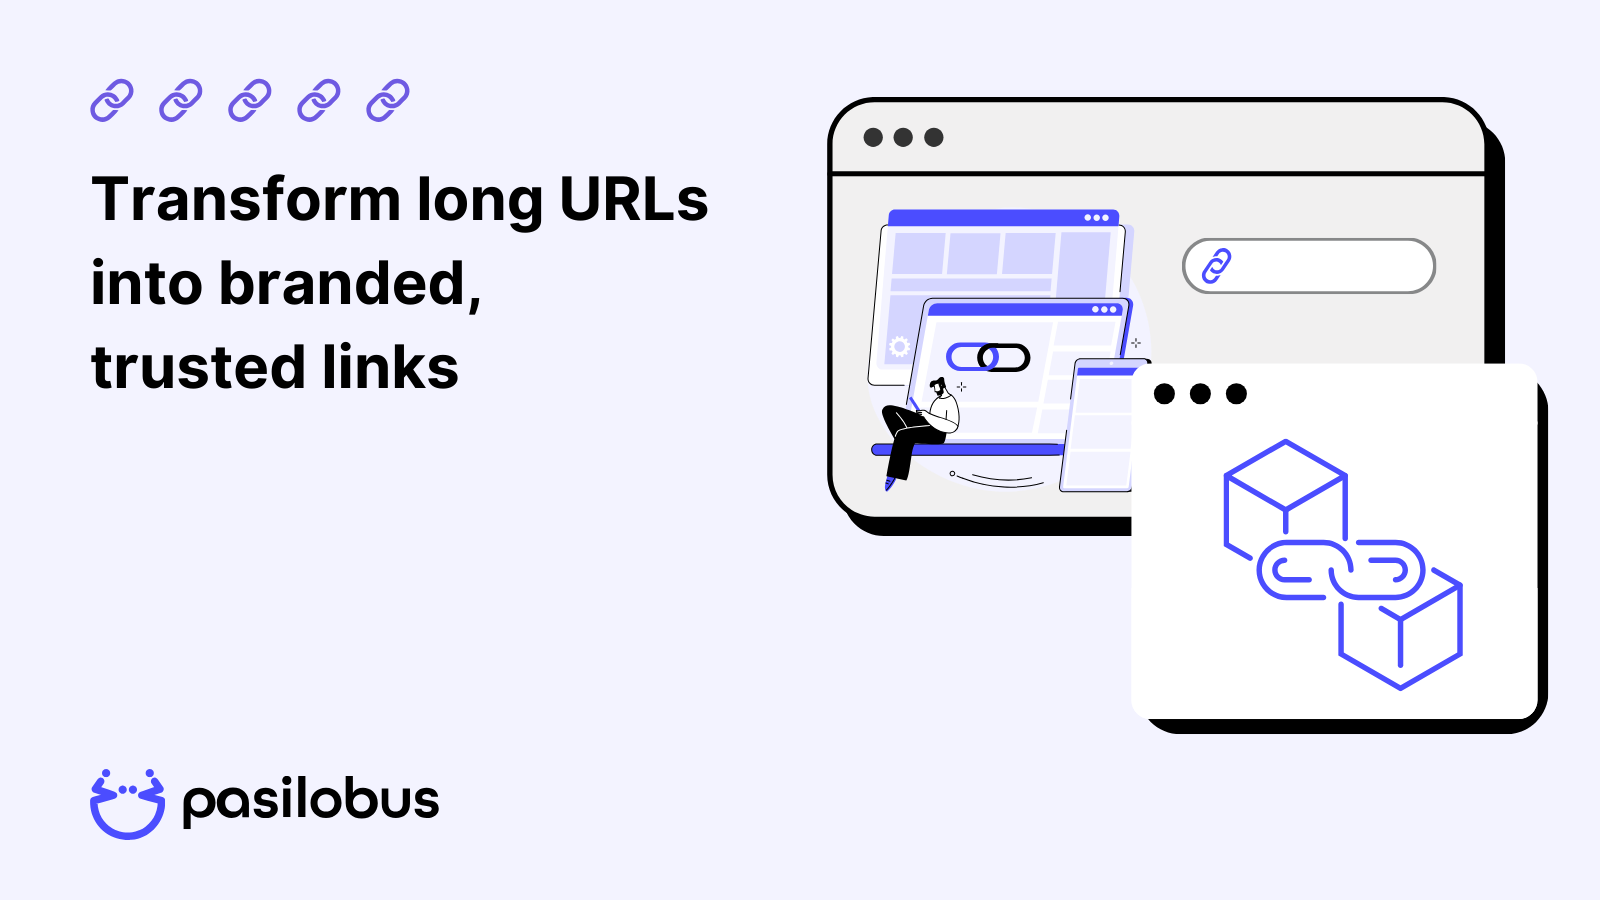 Transform long URLs into branded, trusted links